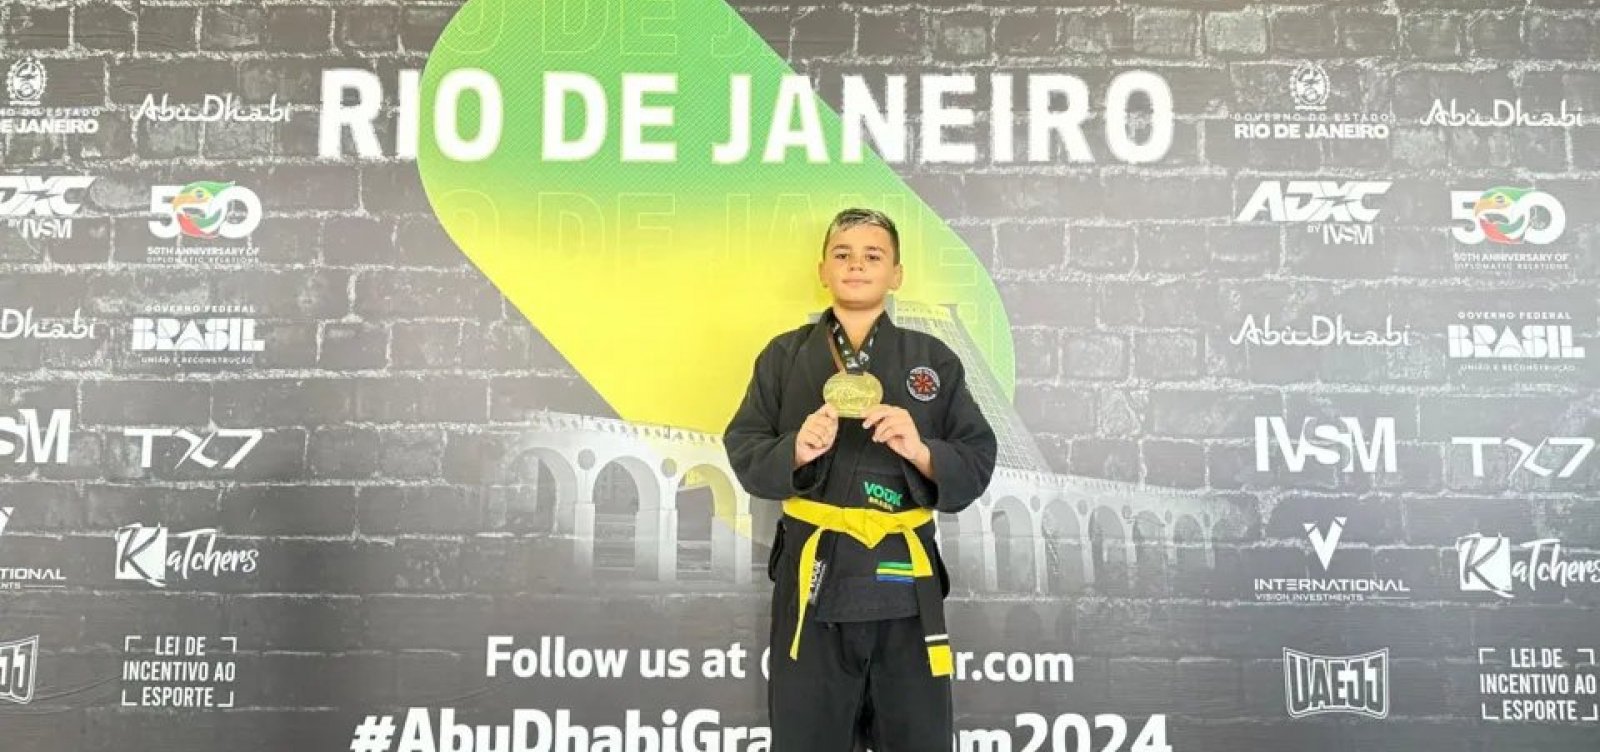 Atleta baiano de jiu-jitsu conquista título brasileiro no Rio